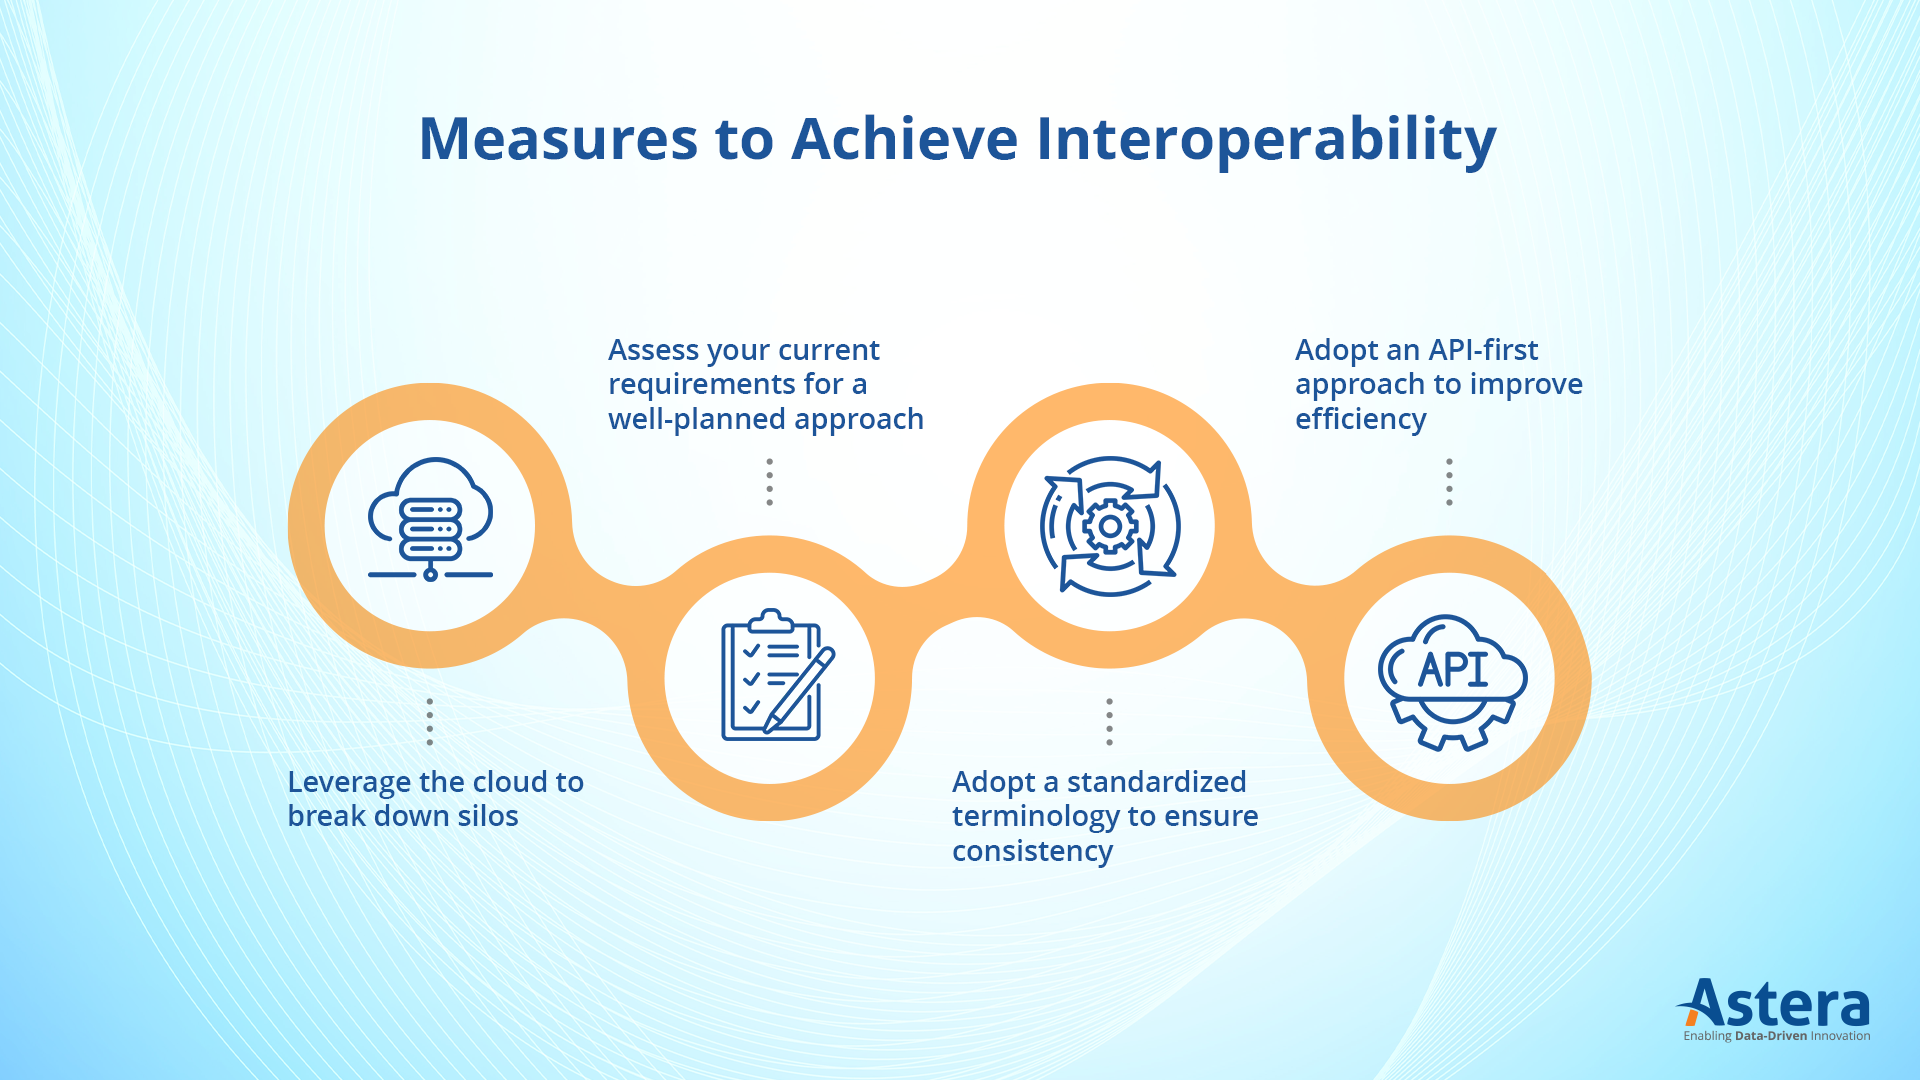 How to achieve interoperability in healthcare